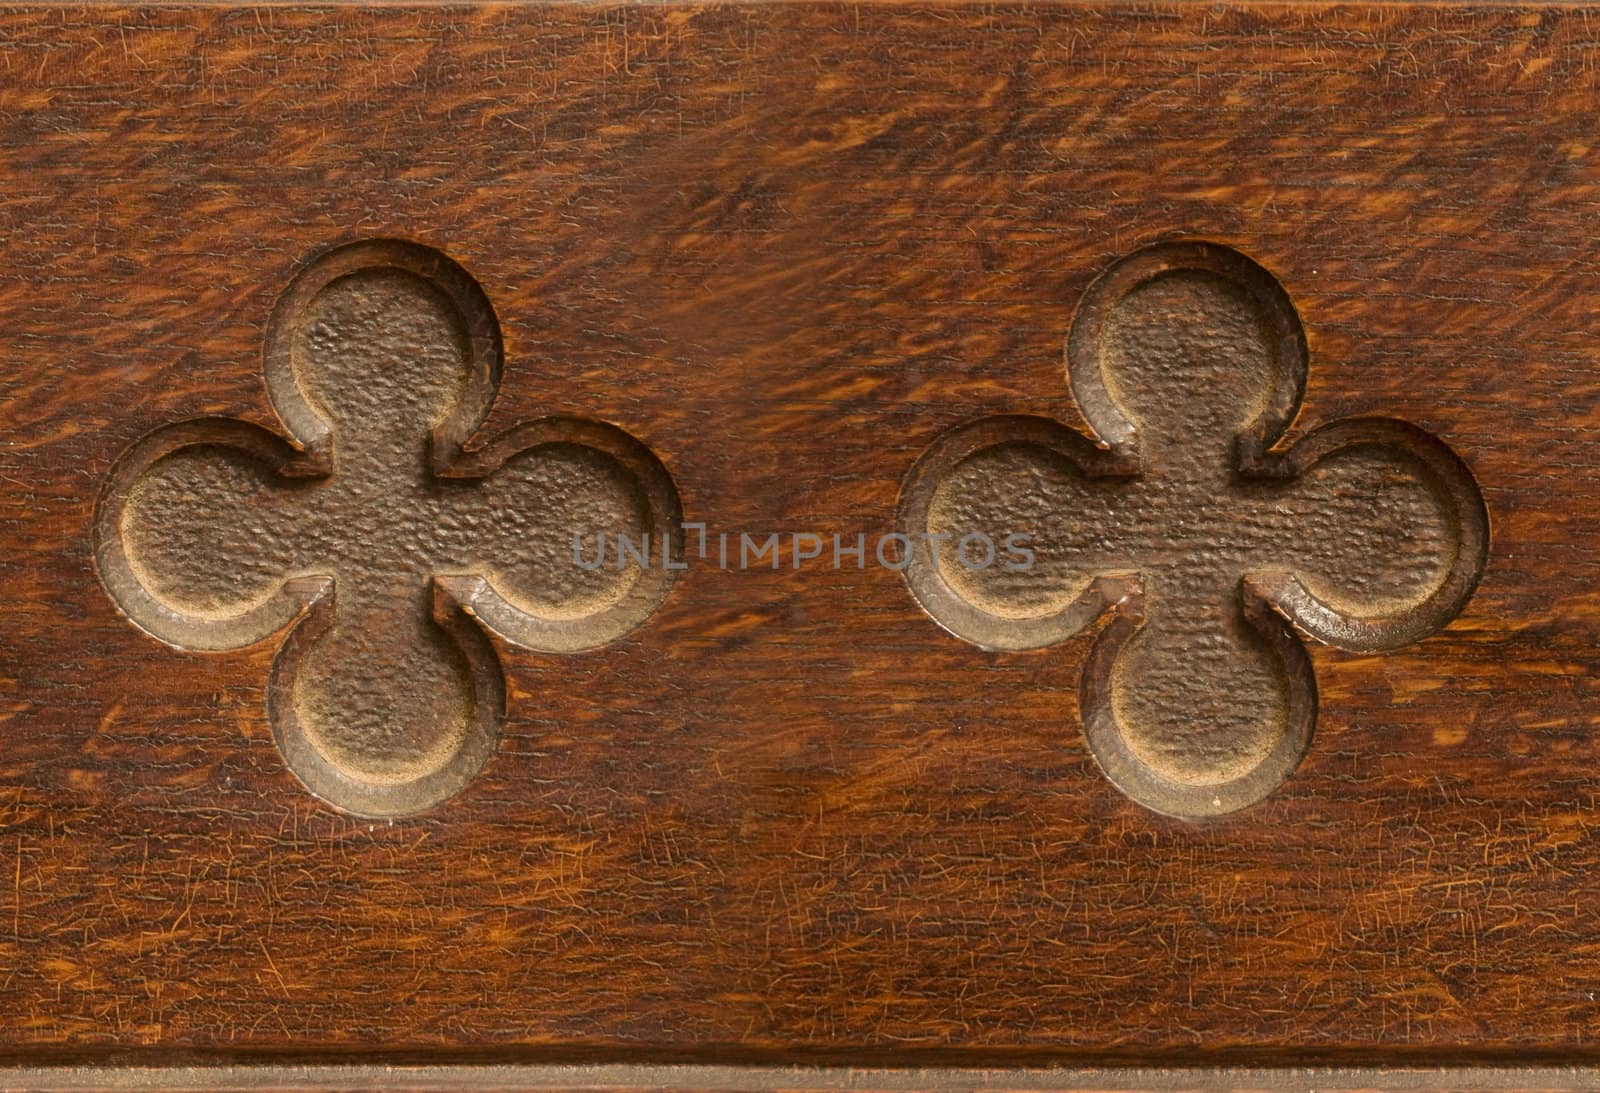 Indented wooden cloverleaf shaped pattern seamlessly tileable